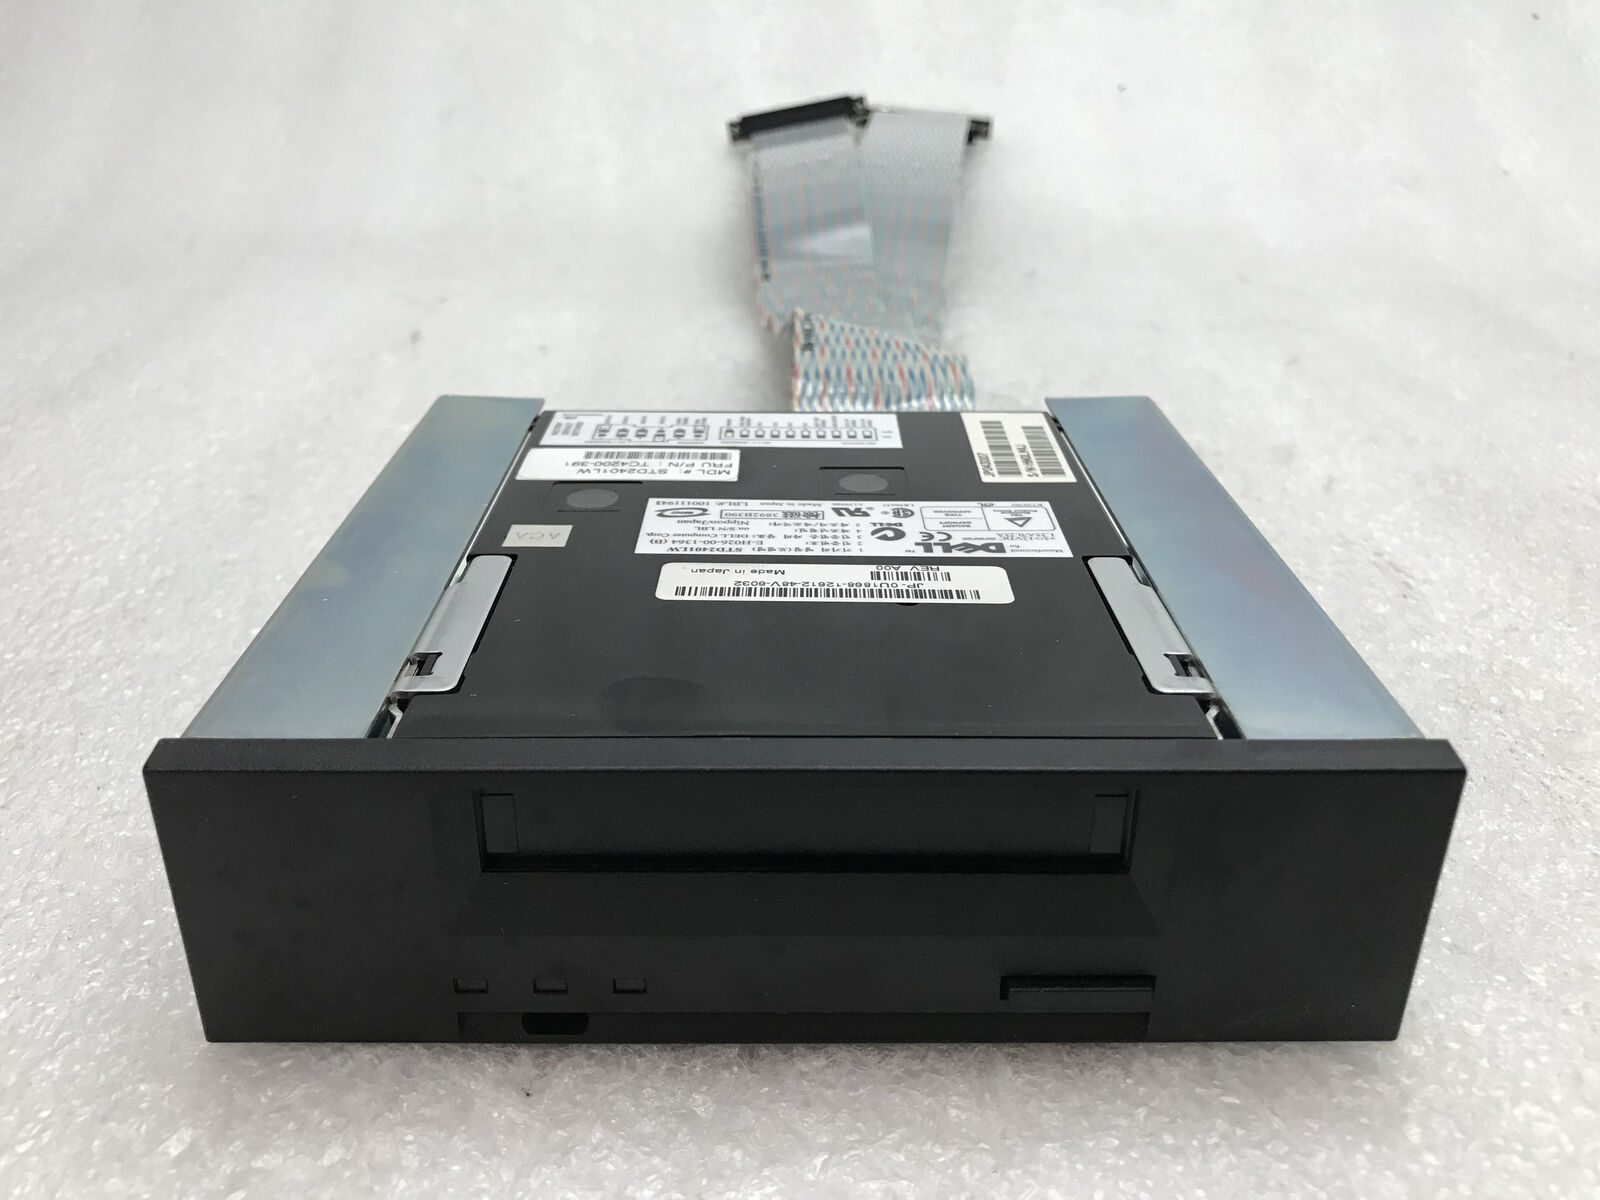 Used IBM Seagate STD2401LW 20/40GB DDS/4 LCD SCSI DAT Internal Tape Drive